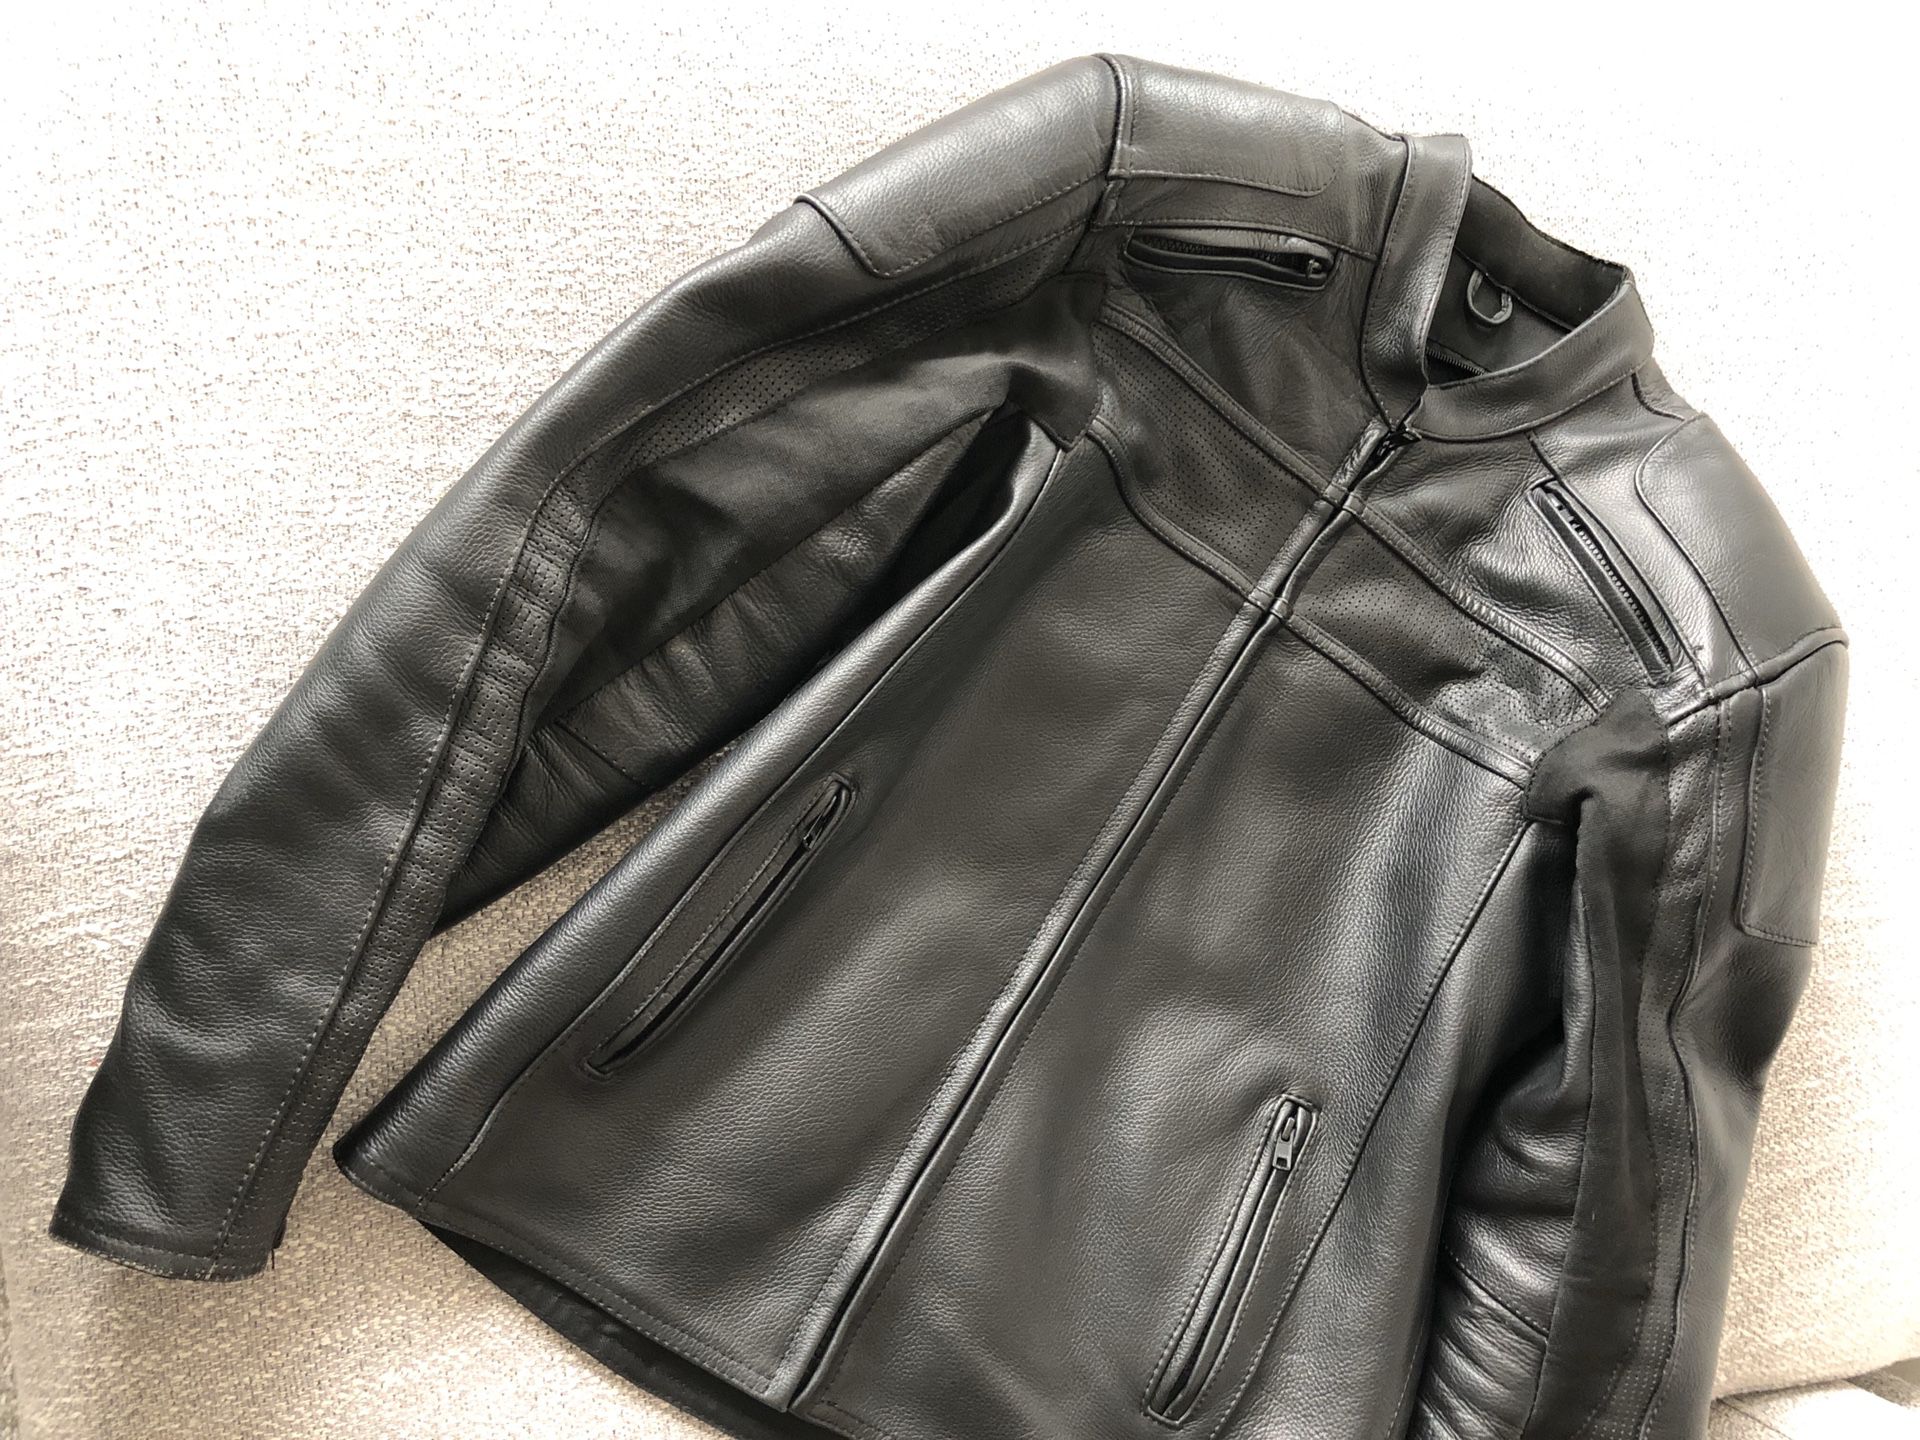 Men’s Leather Motorcycle Riding Jacket Size 40